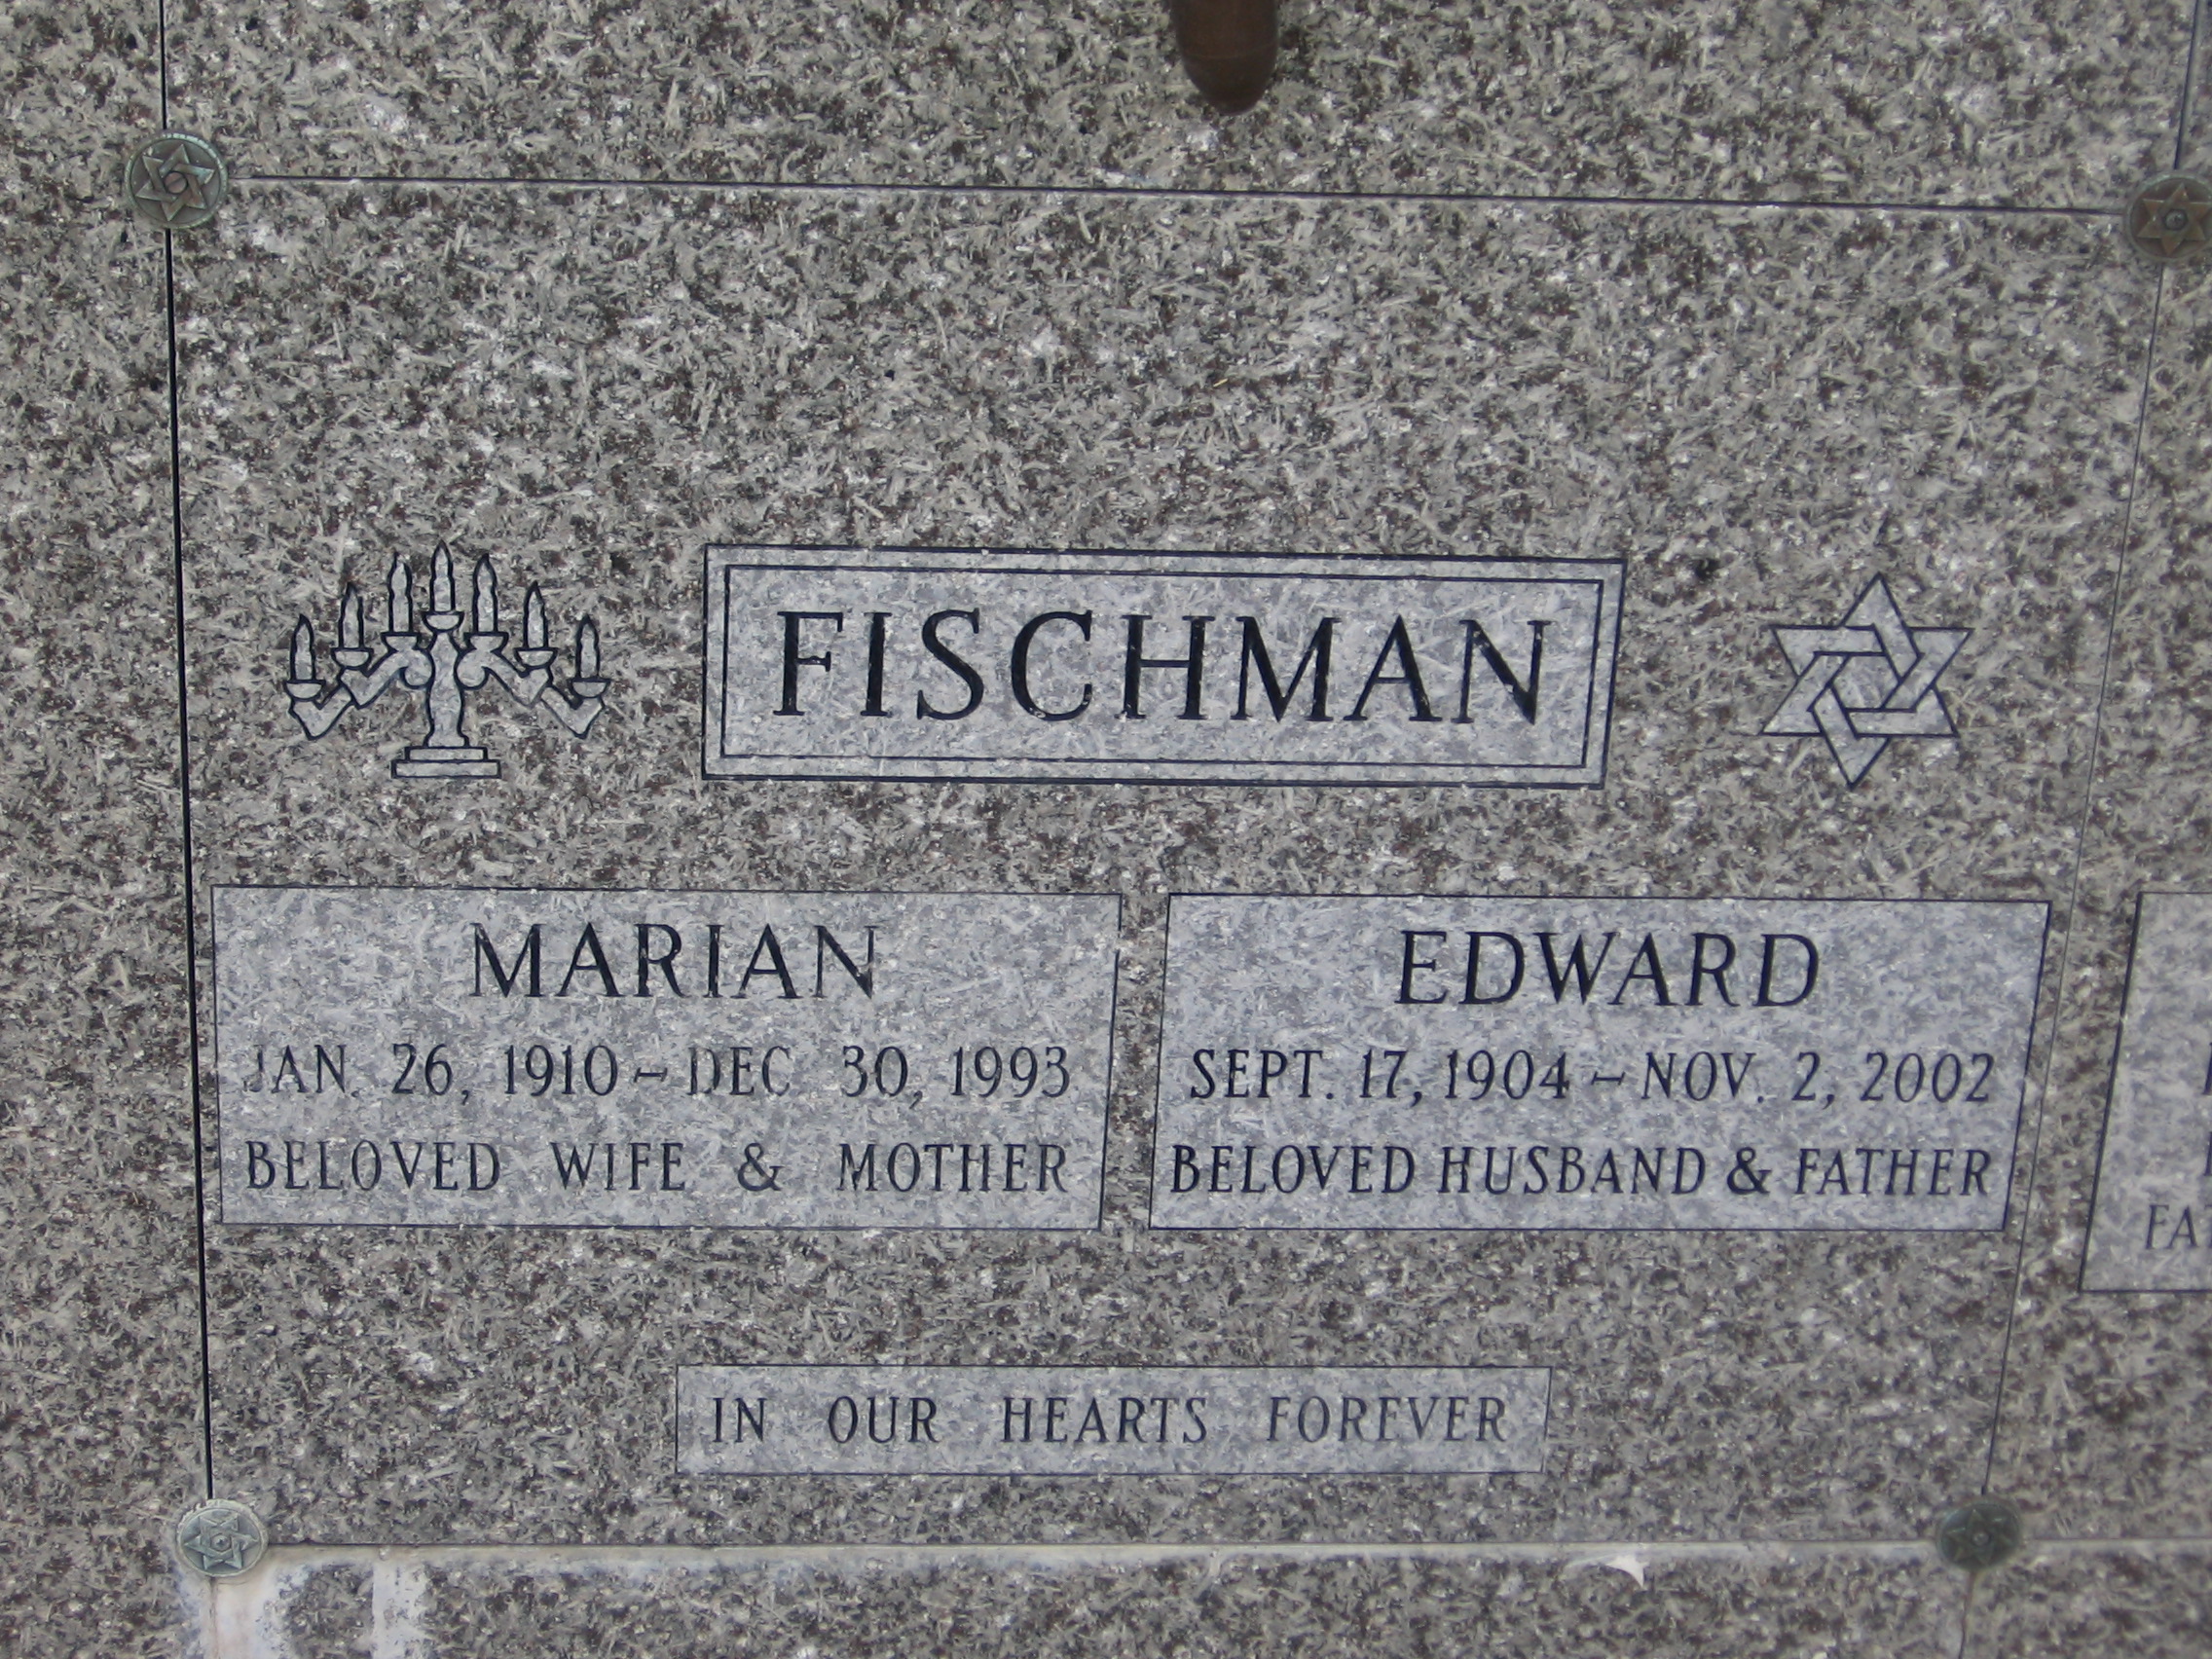 Edward Fischman